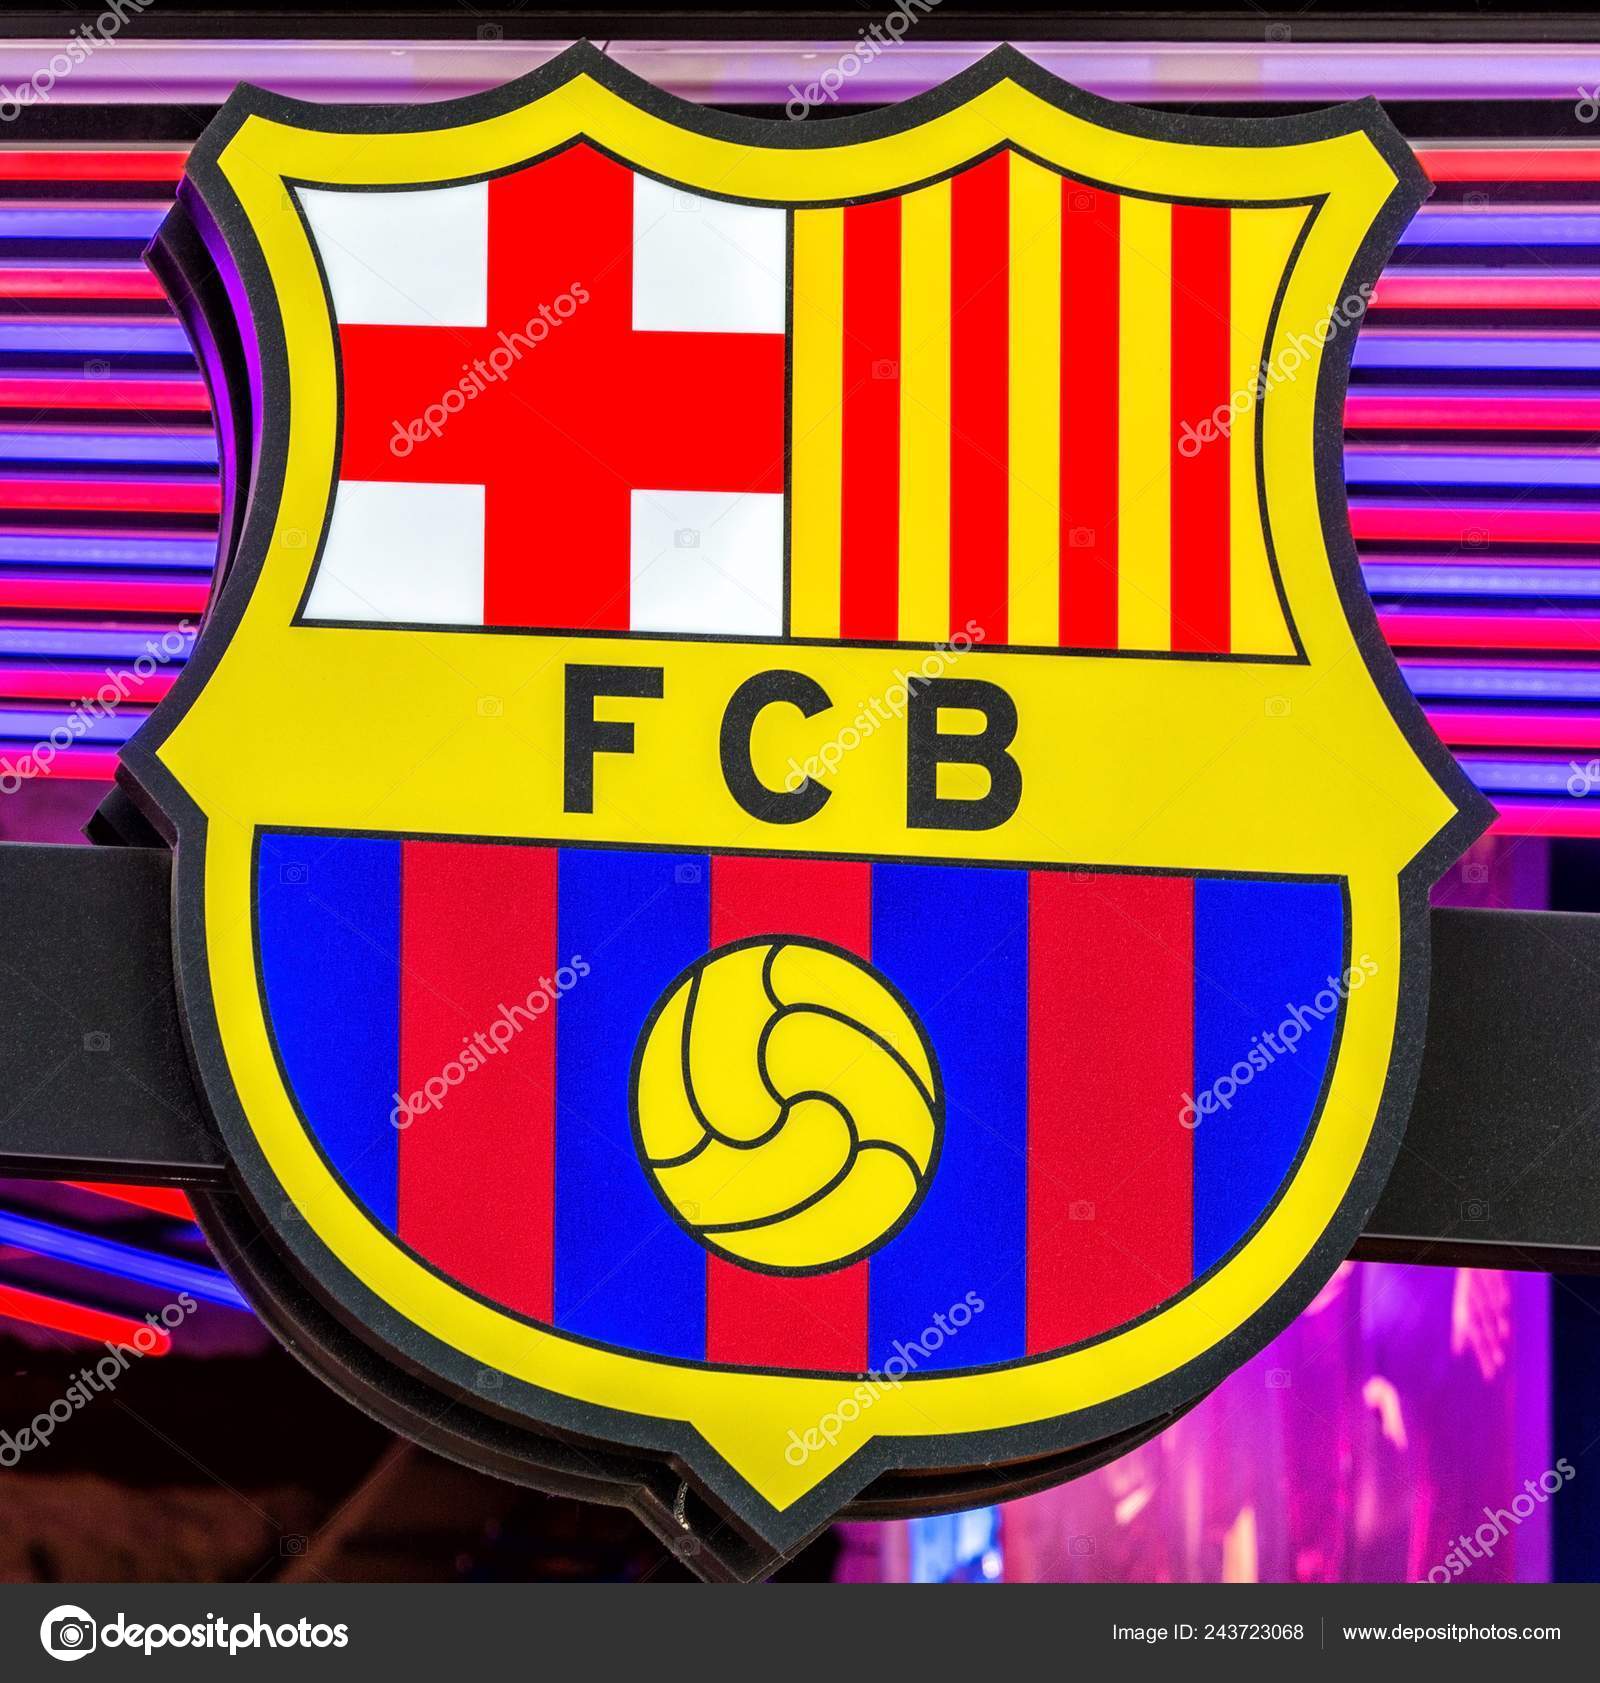 Entrance Fcb Futbol Club Barcelona Official Store Located Passeig Gracia Stock Photo Image By C Mitakag 243723068